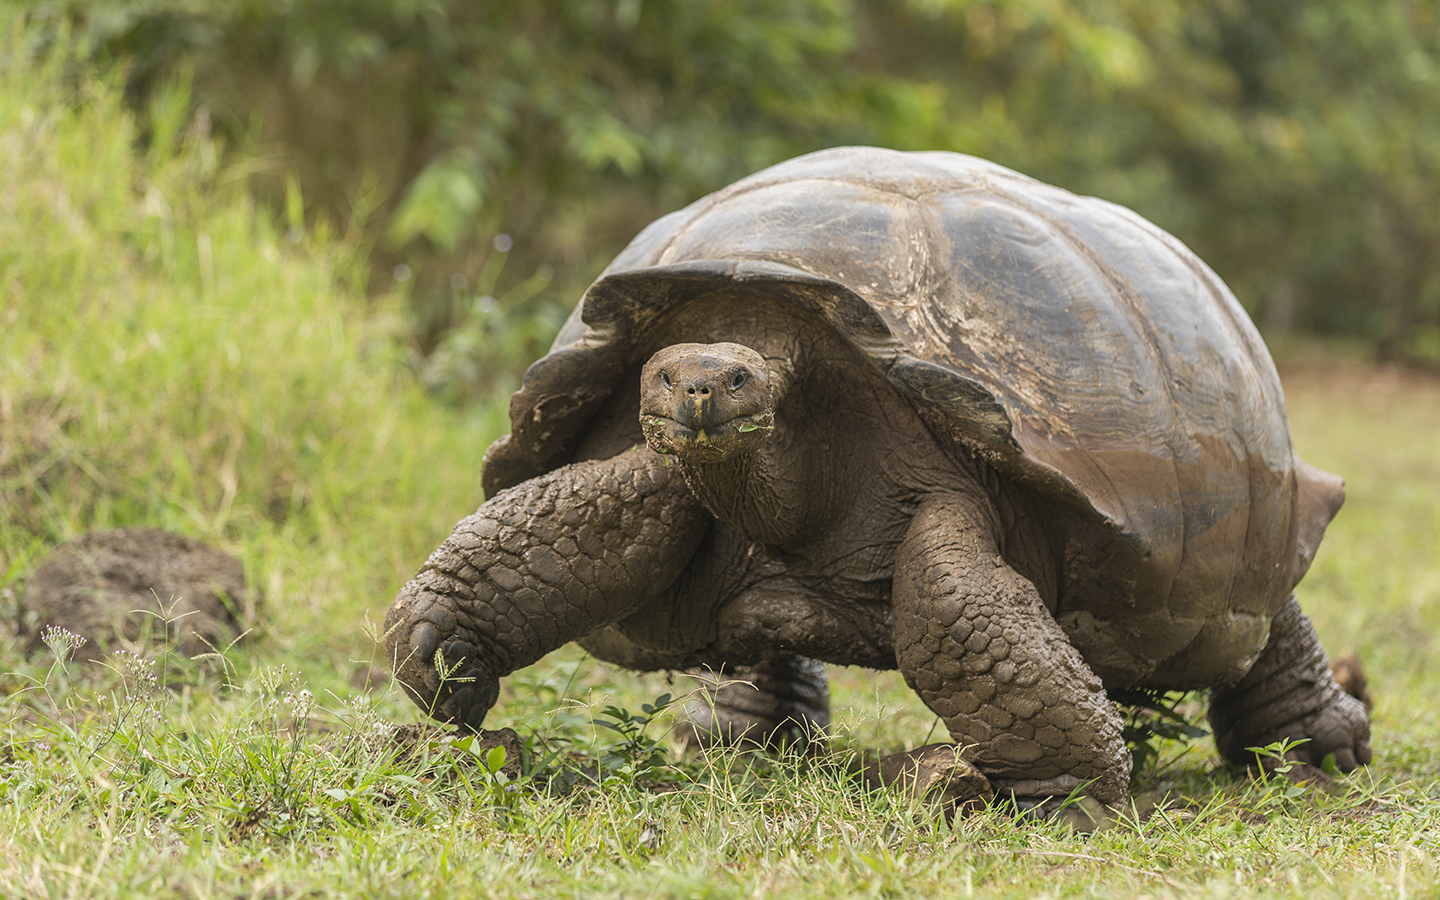 A giant Galapagos tortoise seen walking toward the camera among green grass